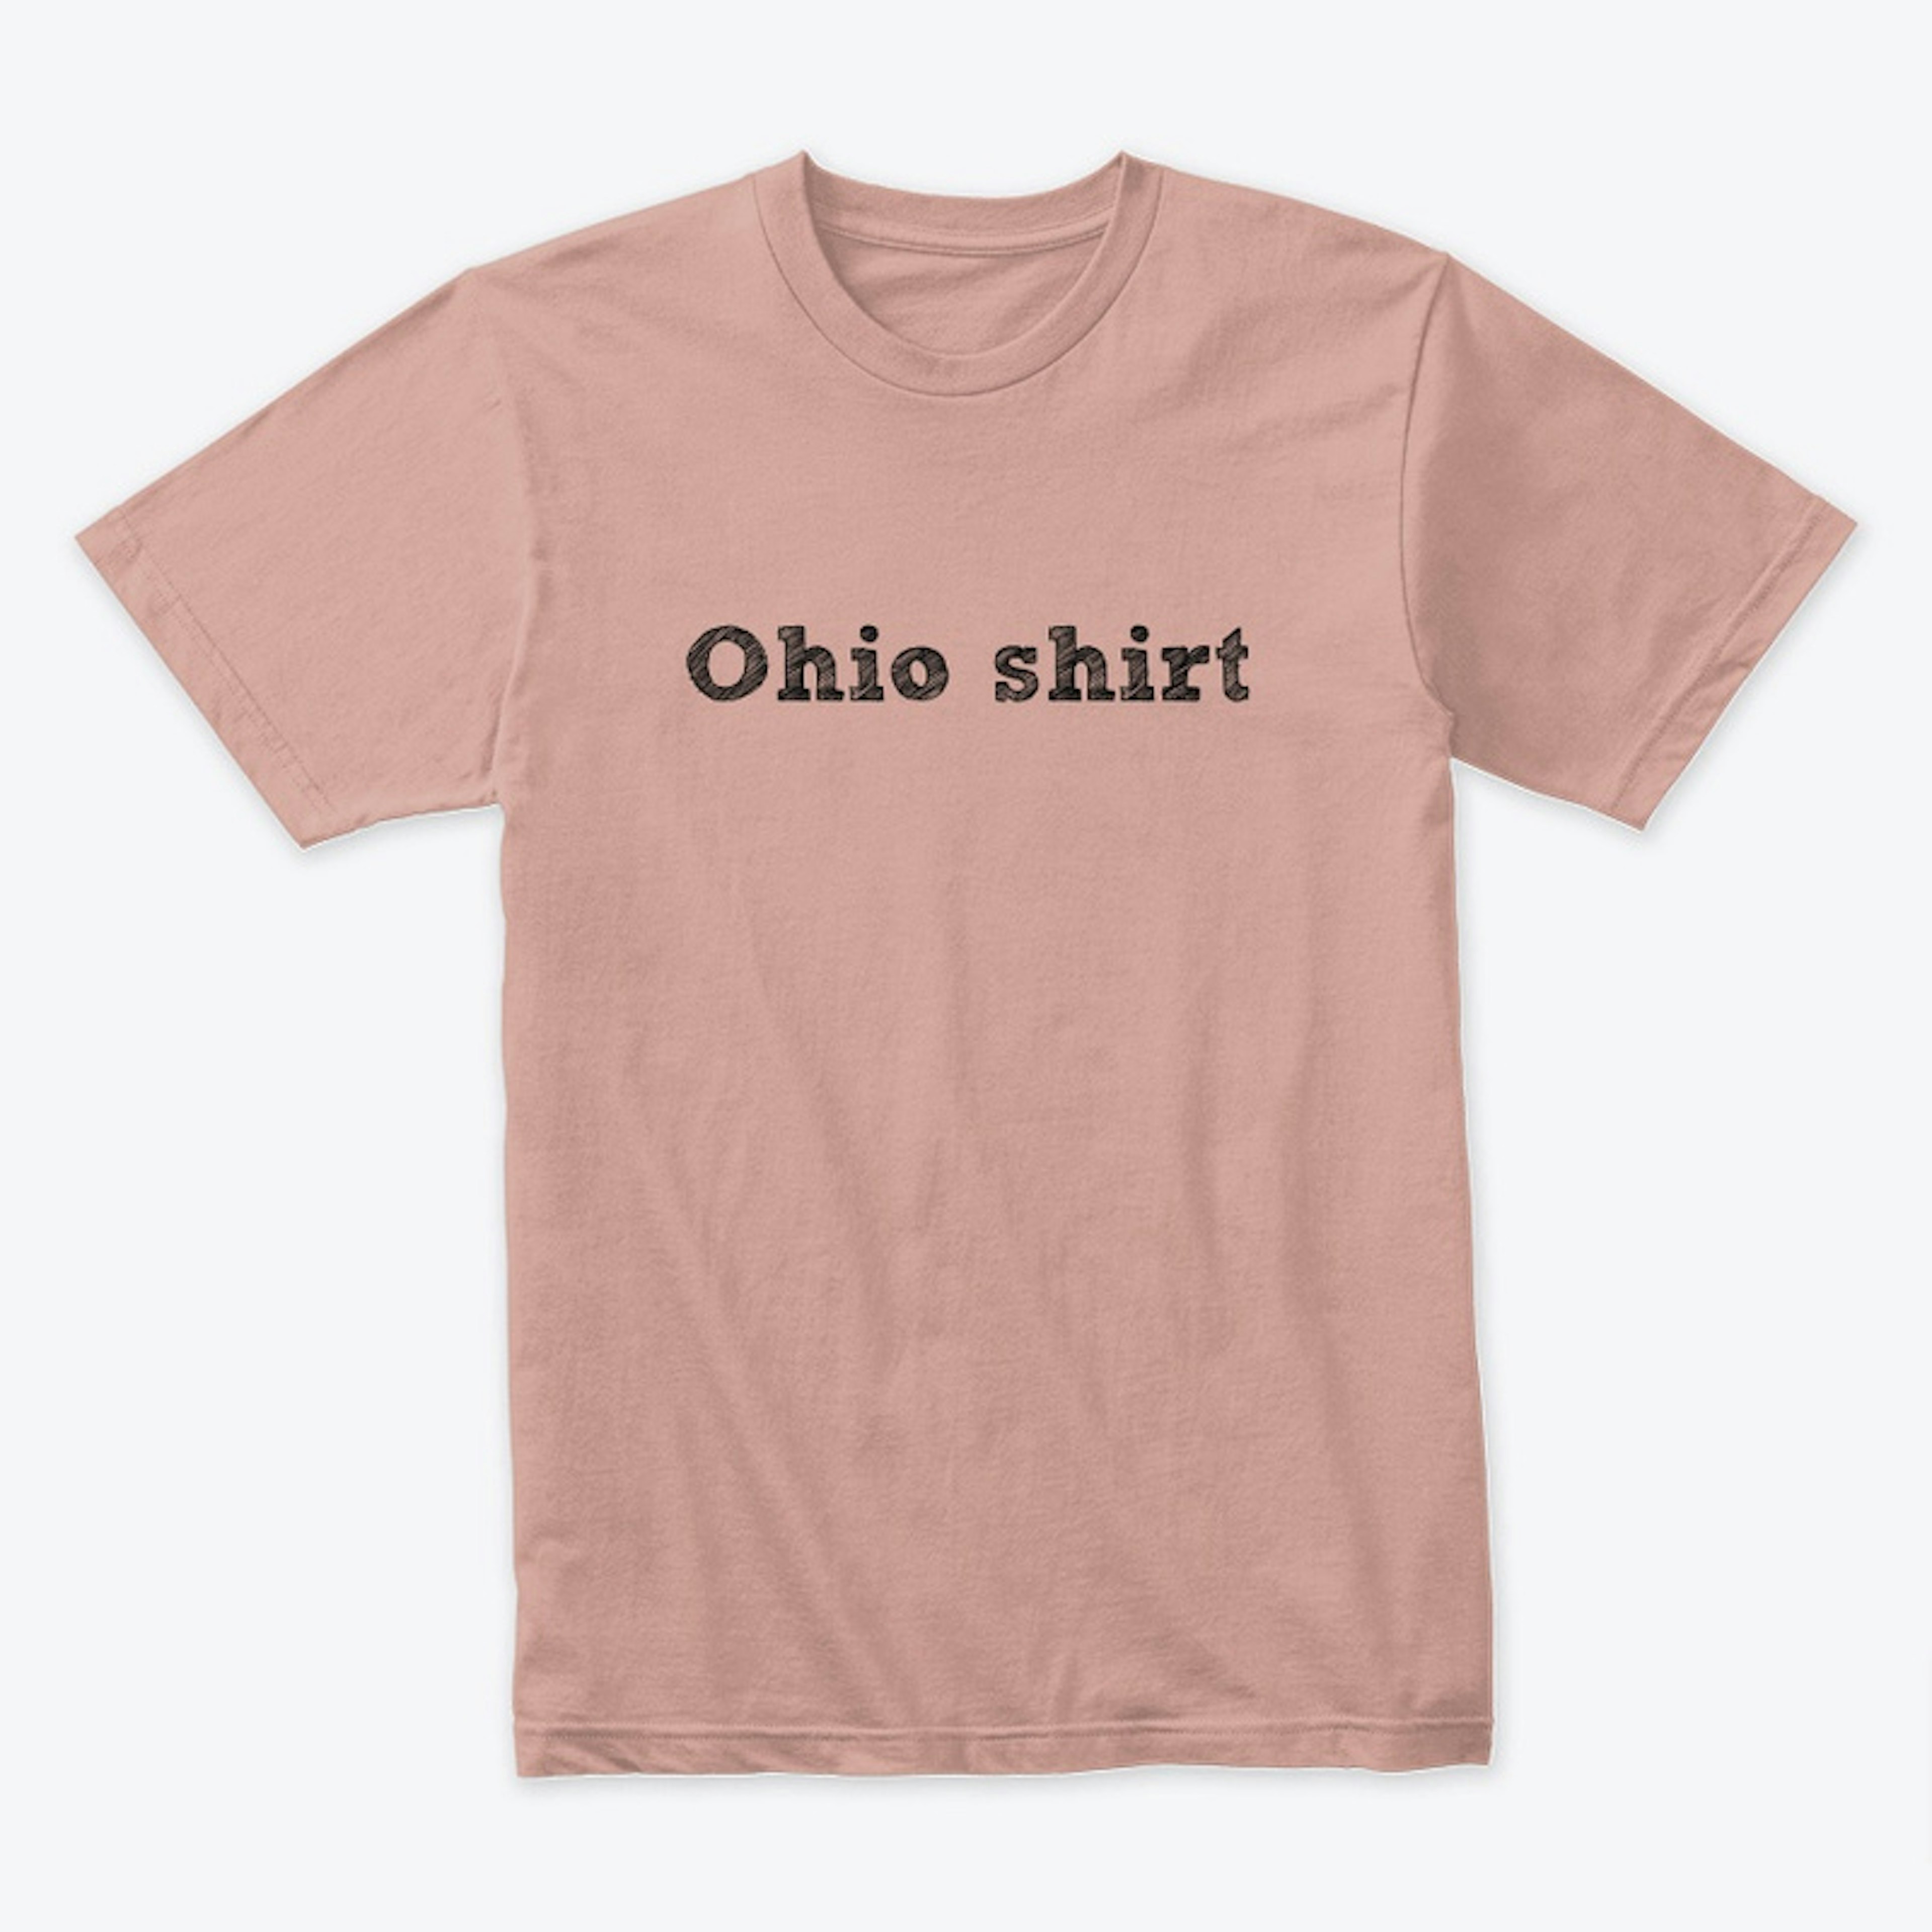 Ohio shirt, t-shirt, tee, basic, obvious